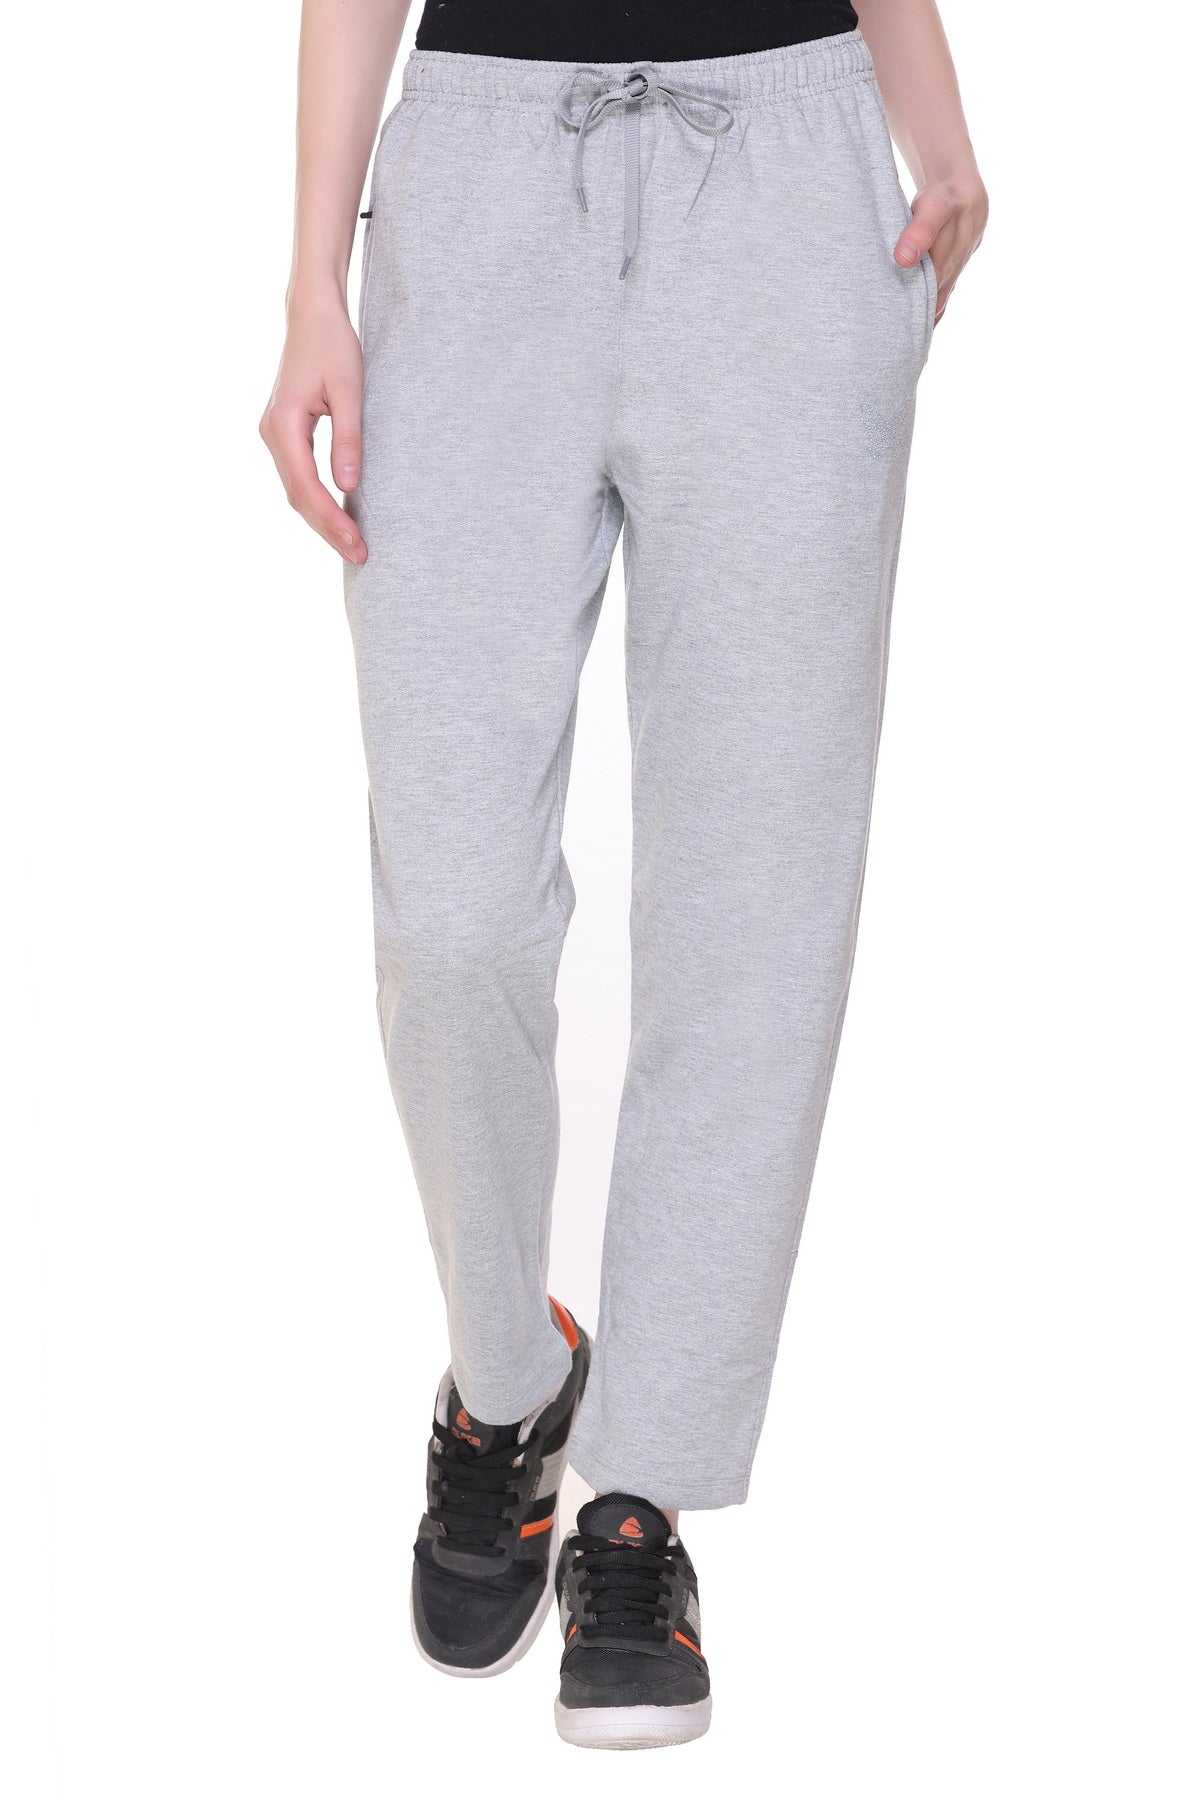 BALEAF Women's Fleece Lined Pants Straight Leg Sweatpants Pull-on Dress  Pants with Zipper Pockets Athletic